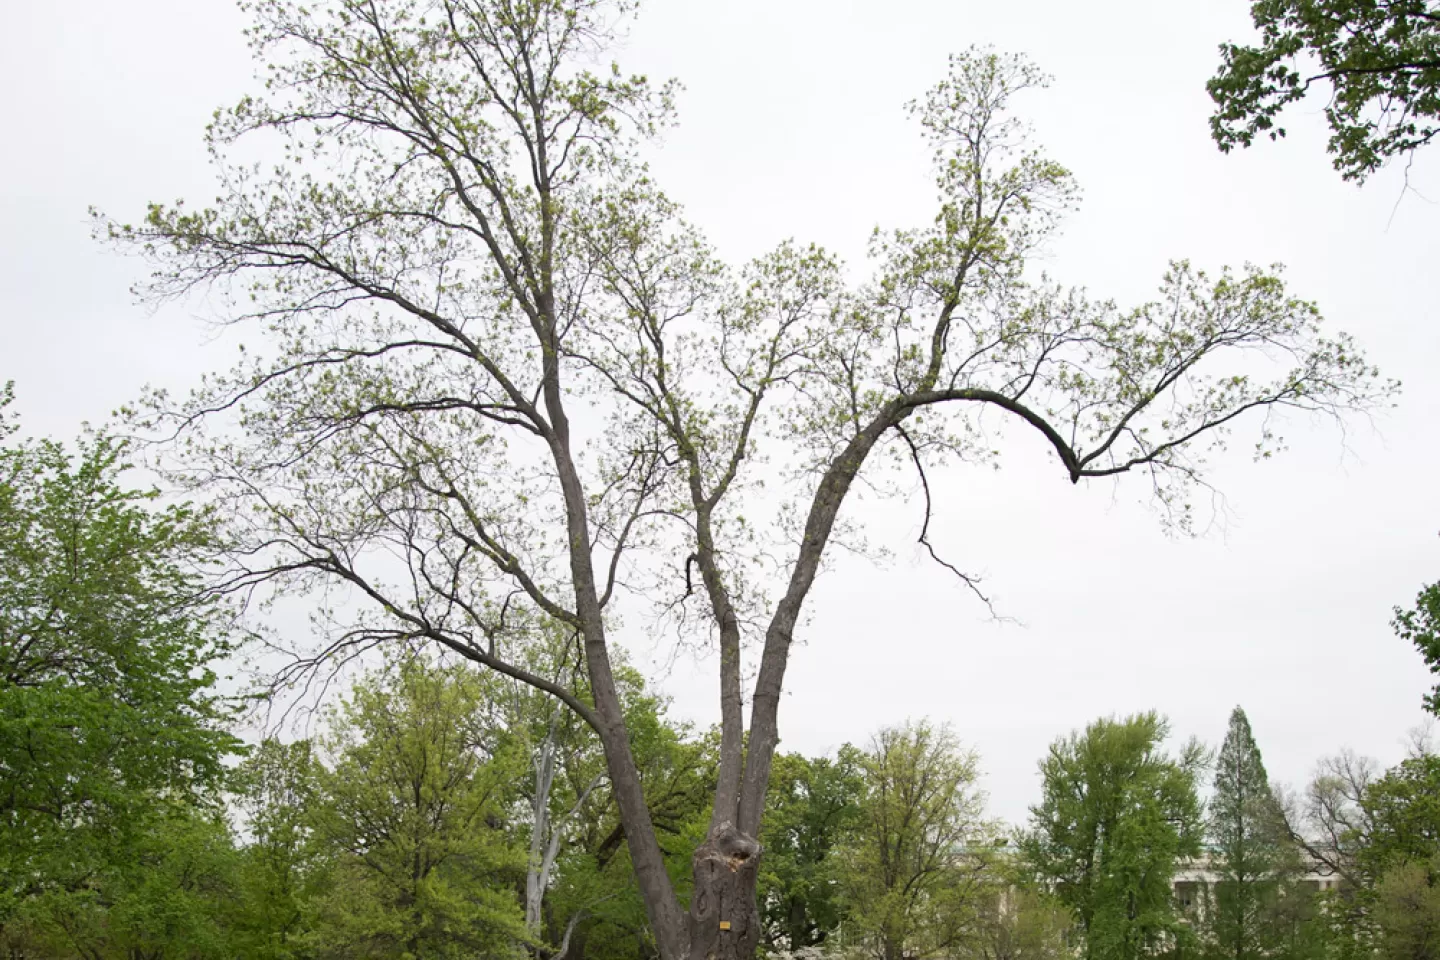 The Senator Willard Saulsbury tree on the U.S. Capitol Grounds during spring.